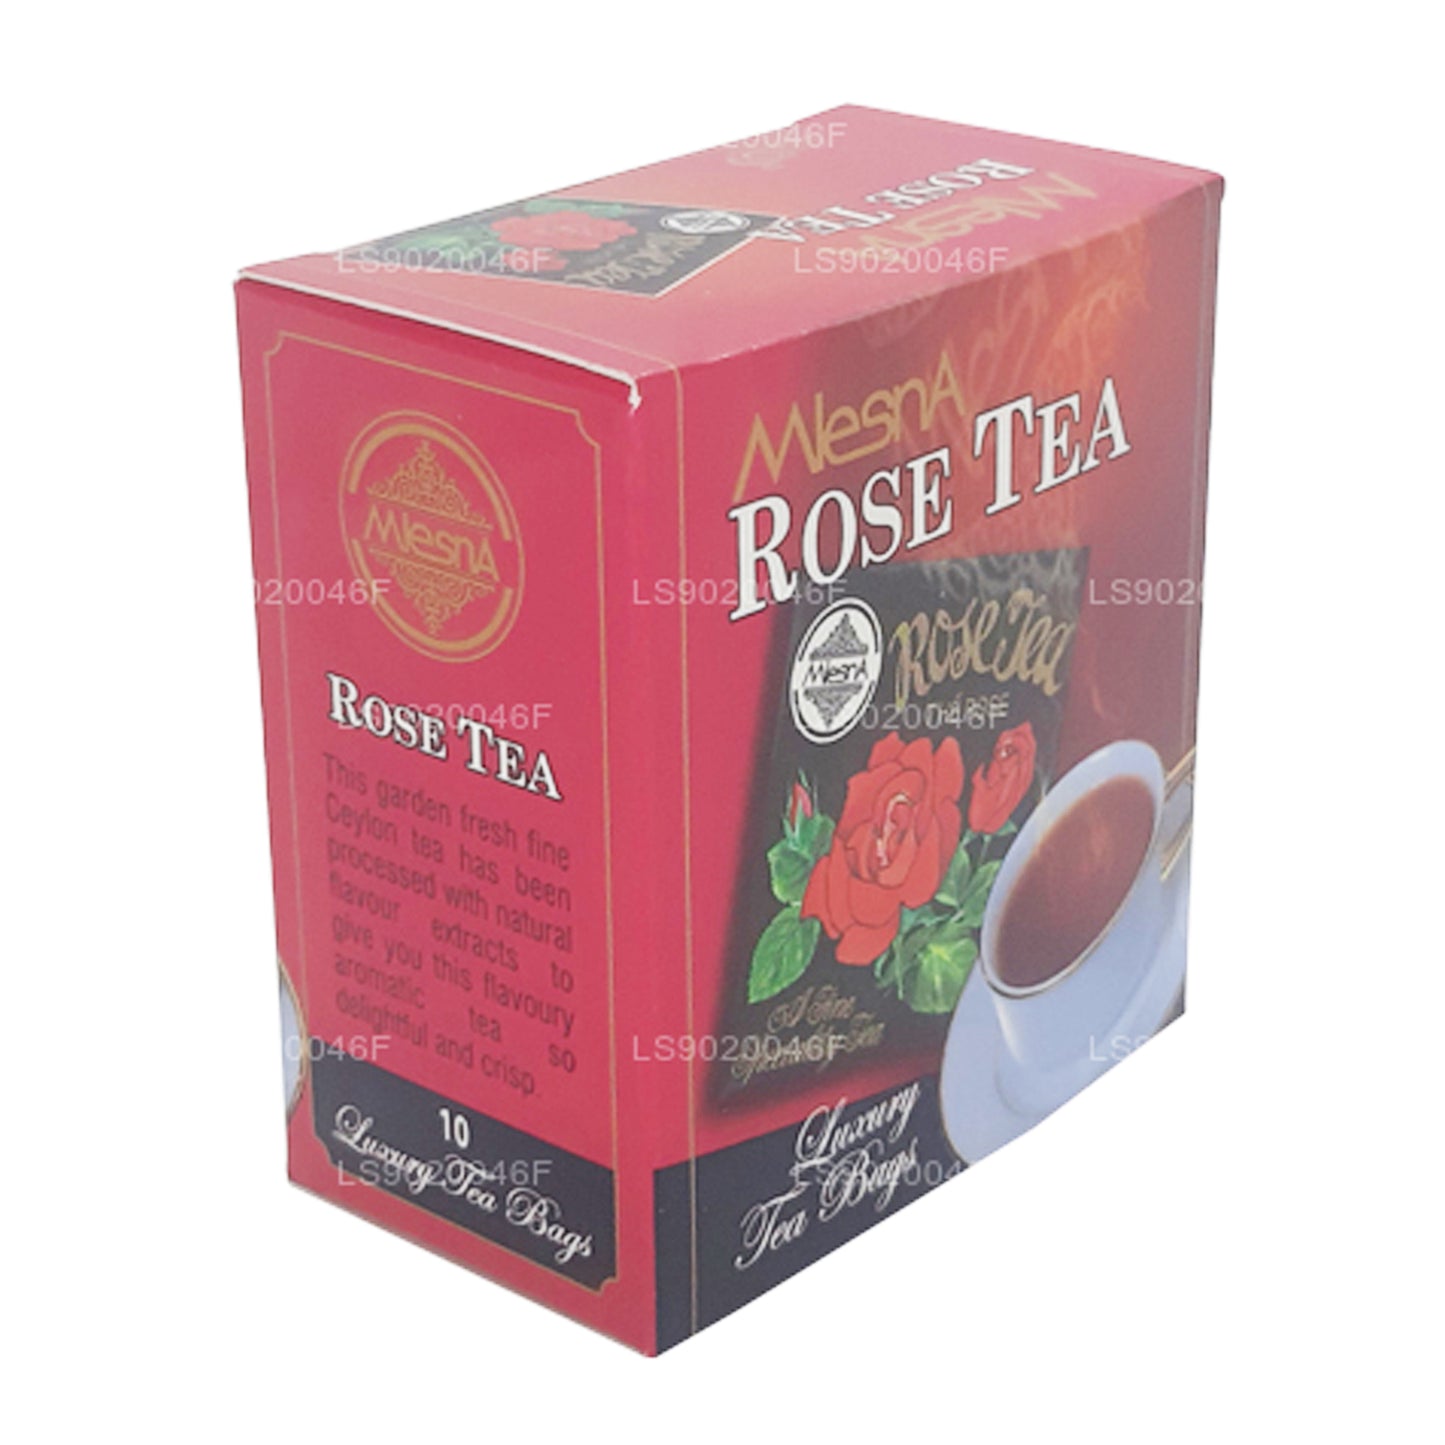 Mlesna Rose Tea (20g) 10 Luxury Tea Bags